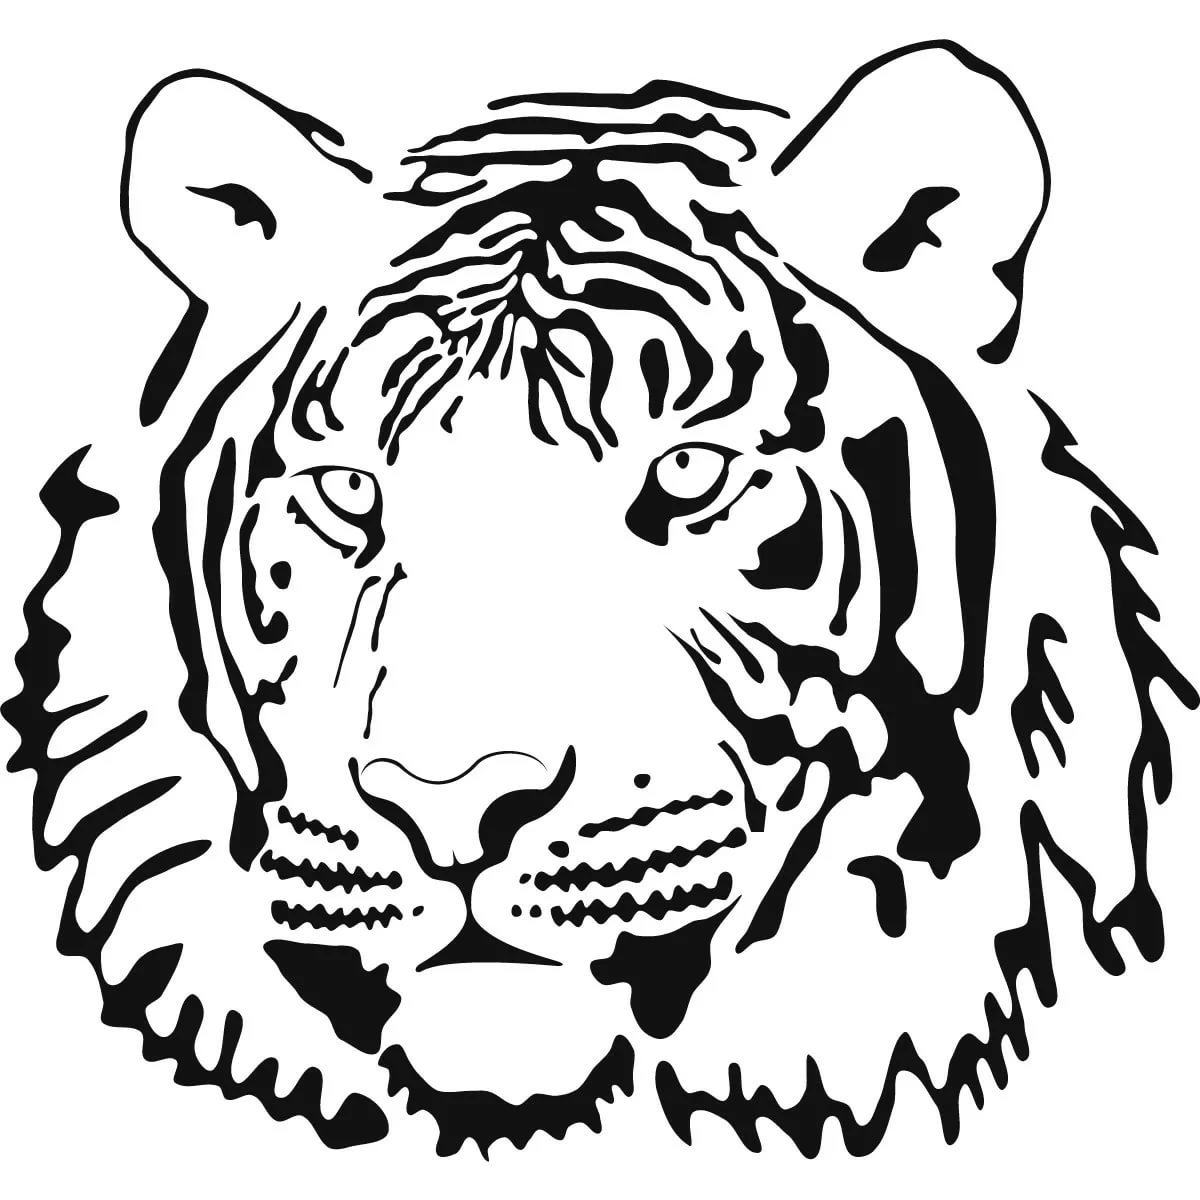 Трафарет тигра для вырезания